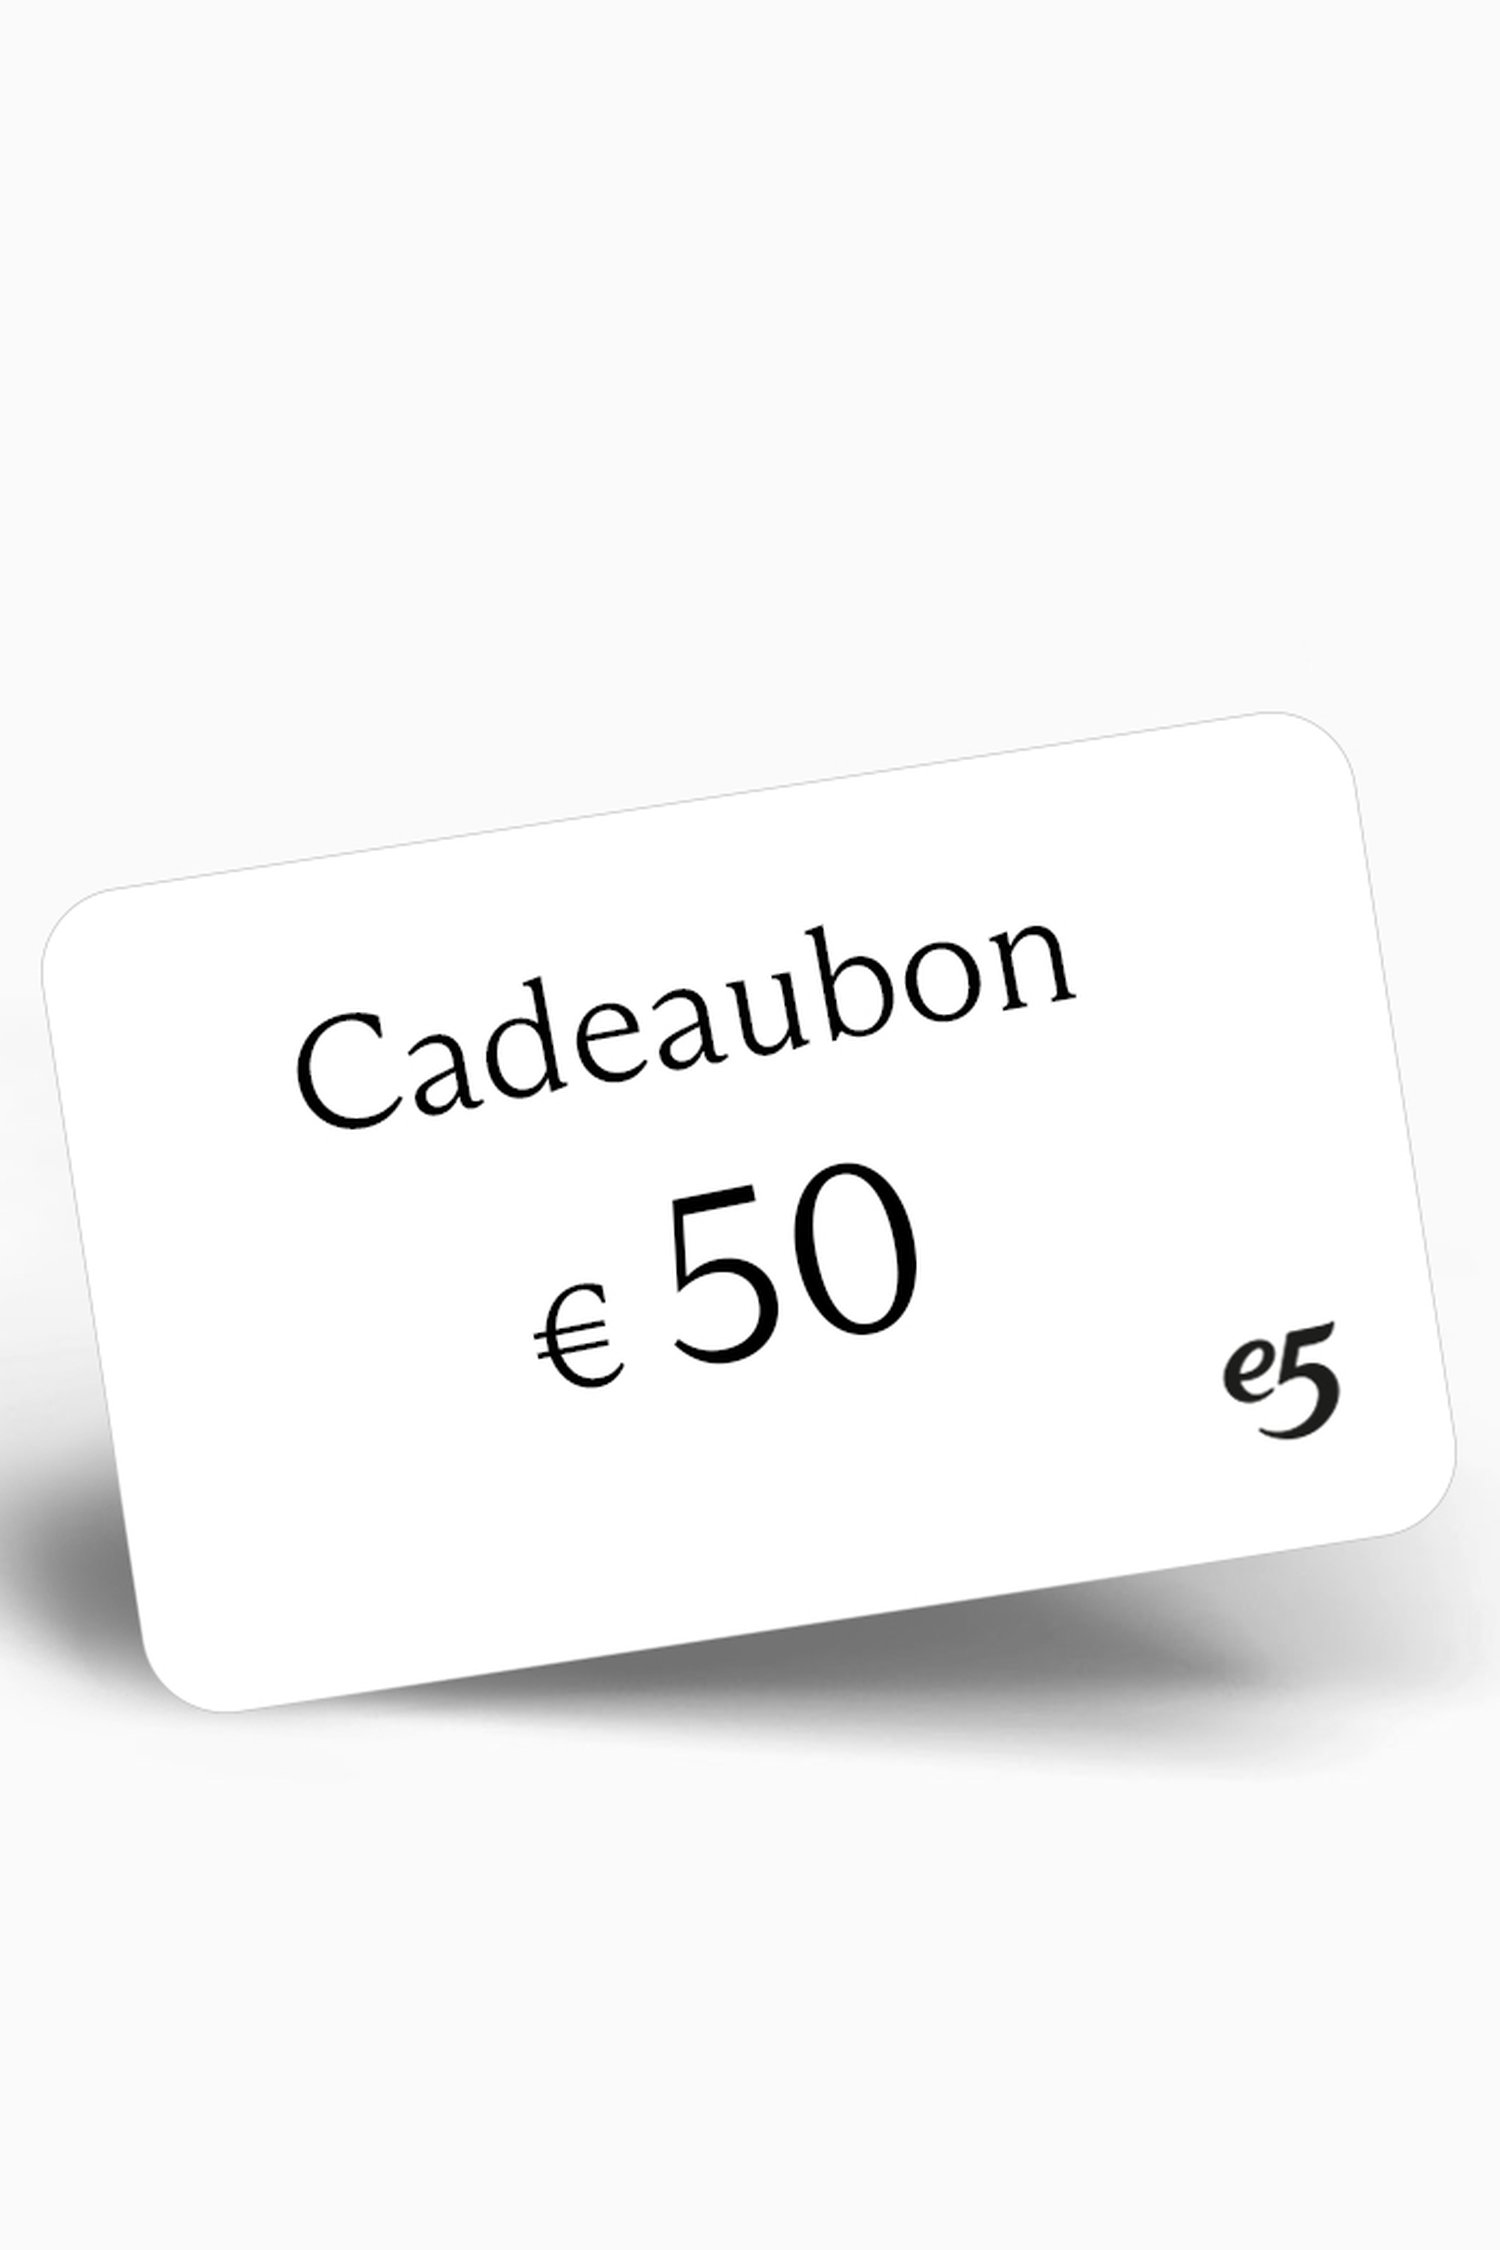 Cadeaubon 50 euro van e5 voor Dames